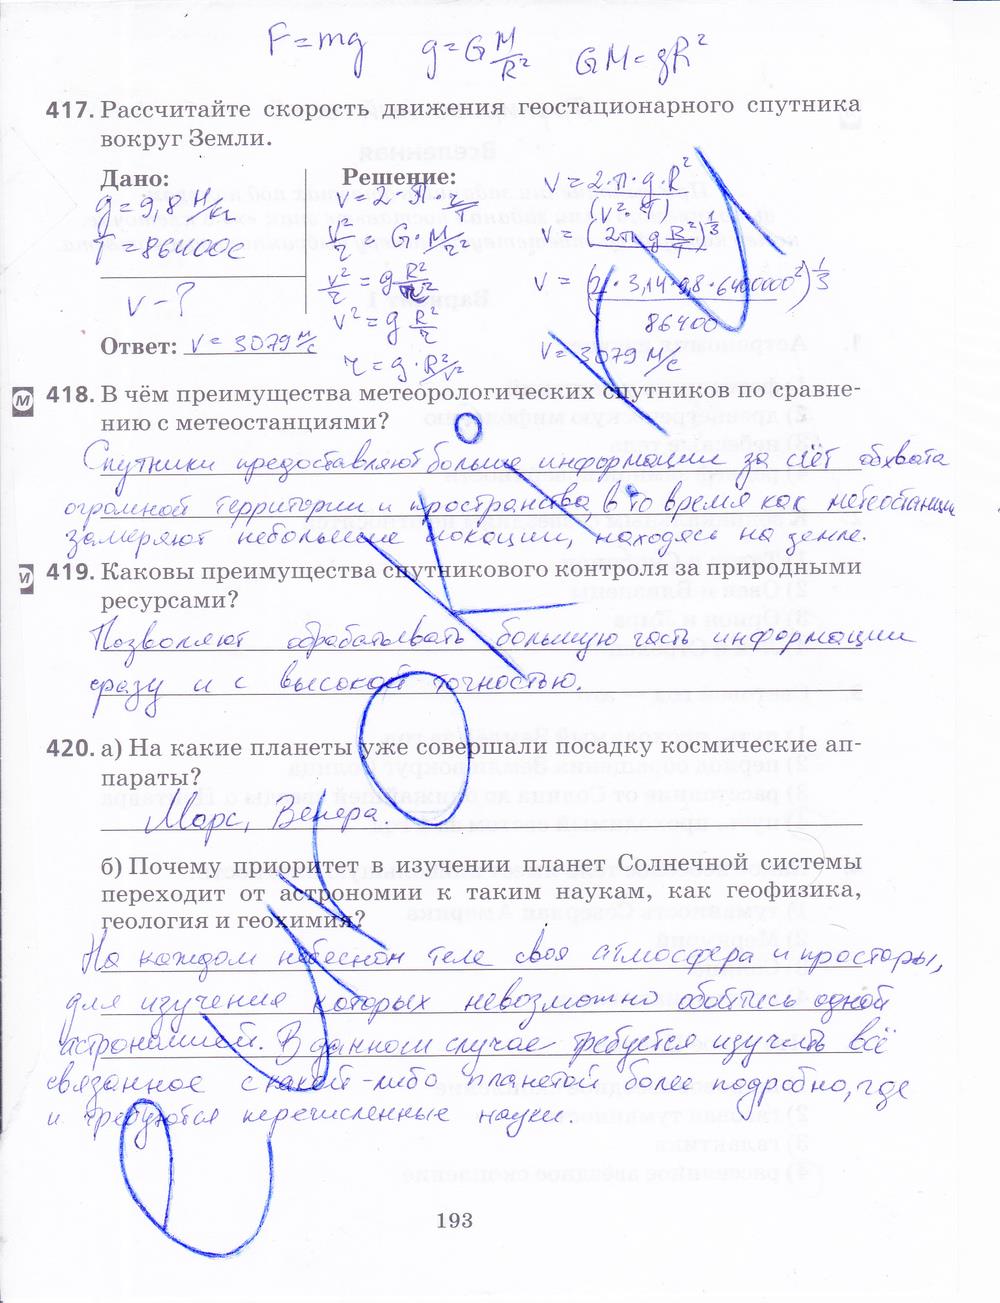 гдз 9 класс рабочая тетрадь страница 193 физика Пурышева, Важеевская, Чаругин